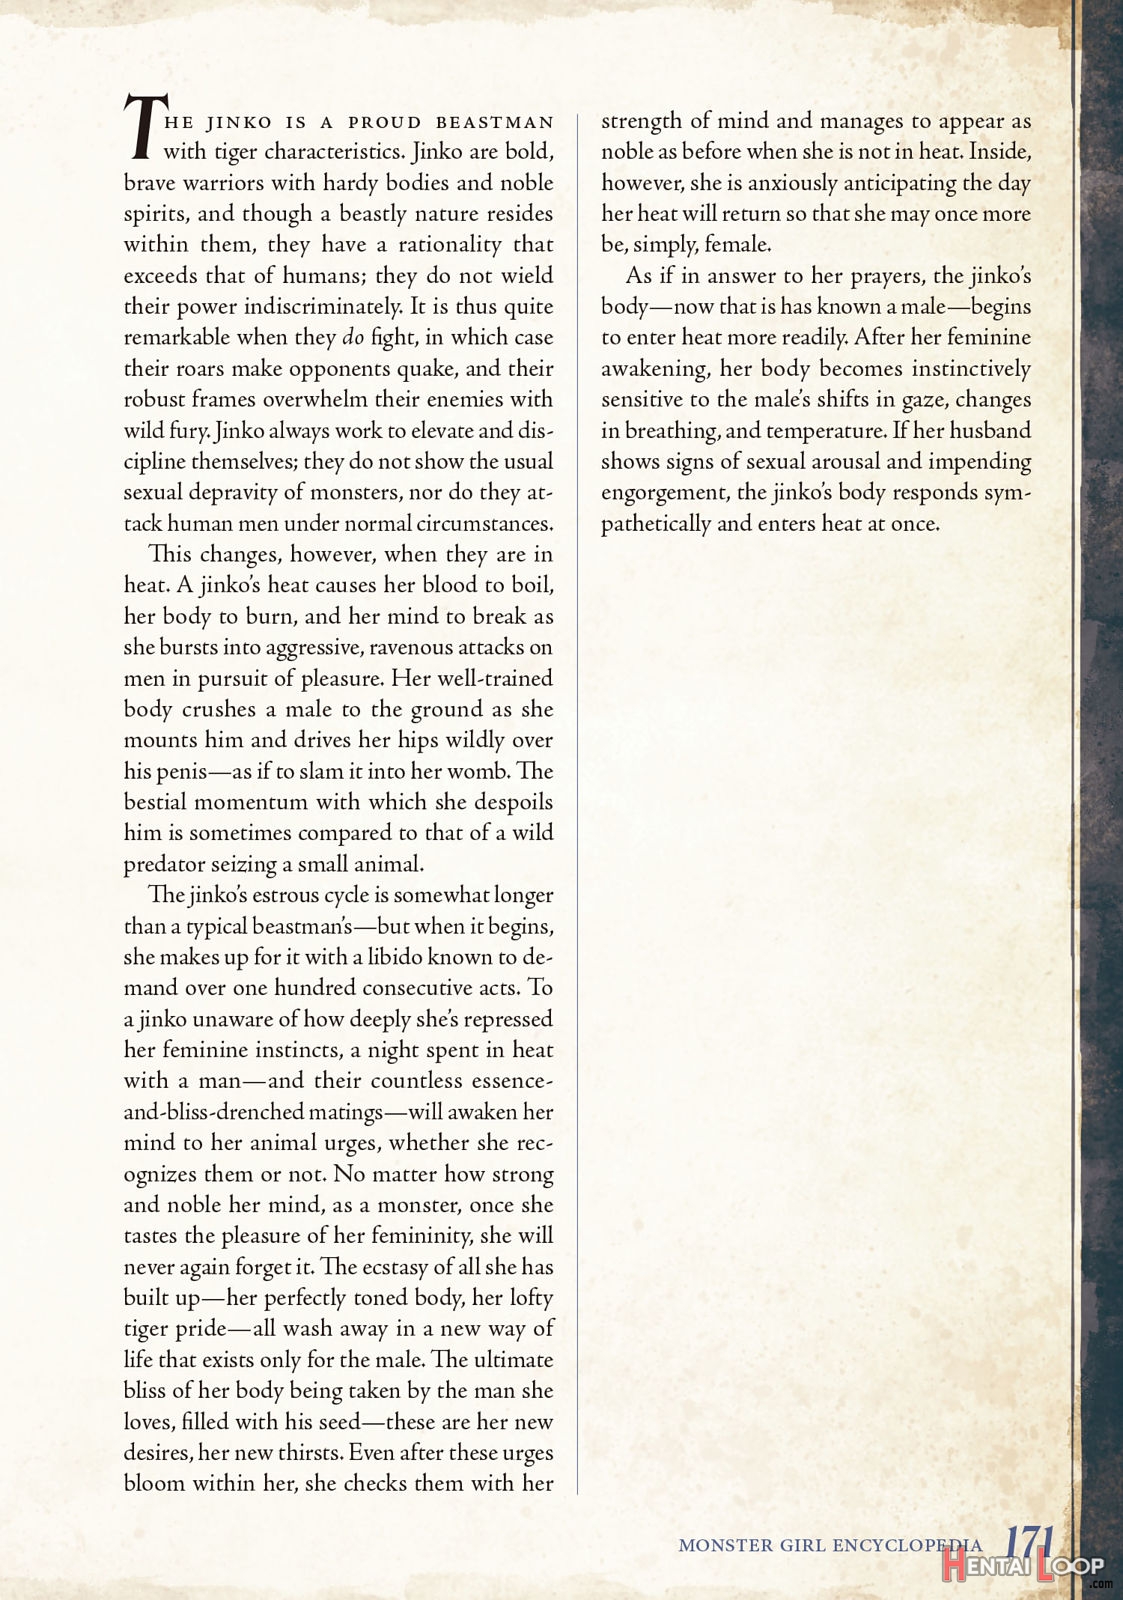 Monster Girl Encyclopedia Vol. 2 page 172